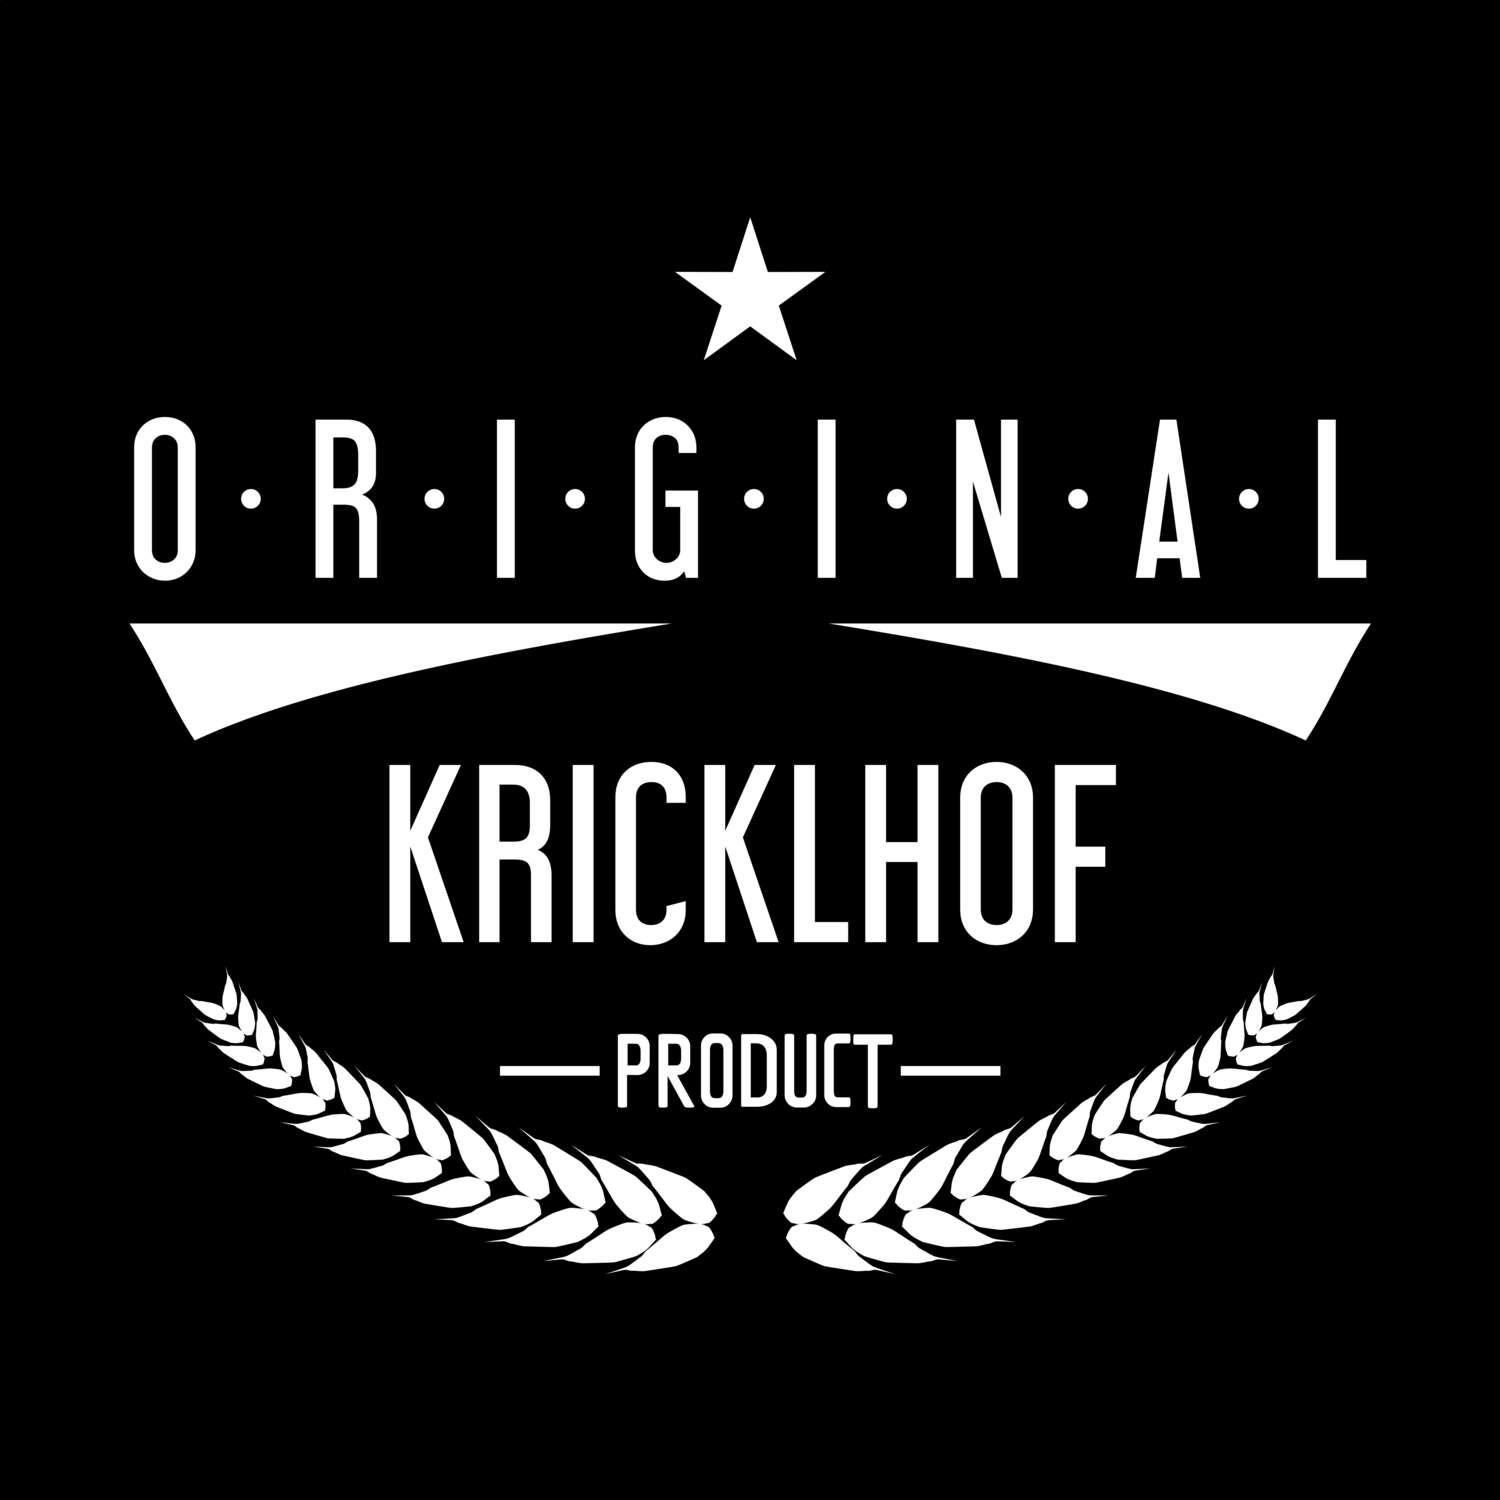 Kricklhof T-Shirt »Original Product«